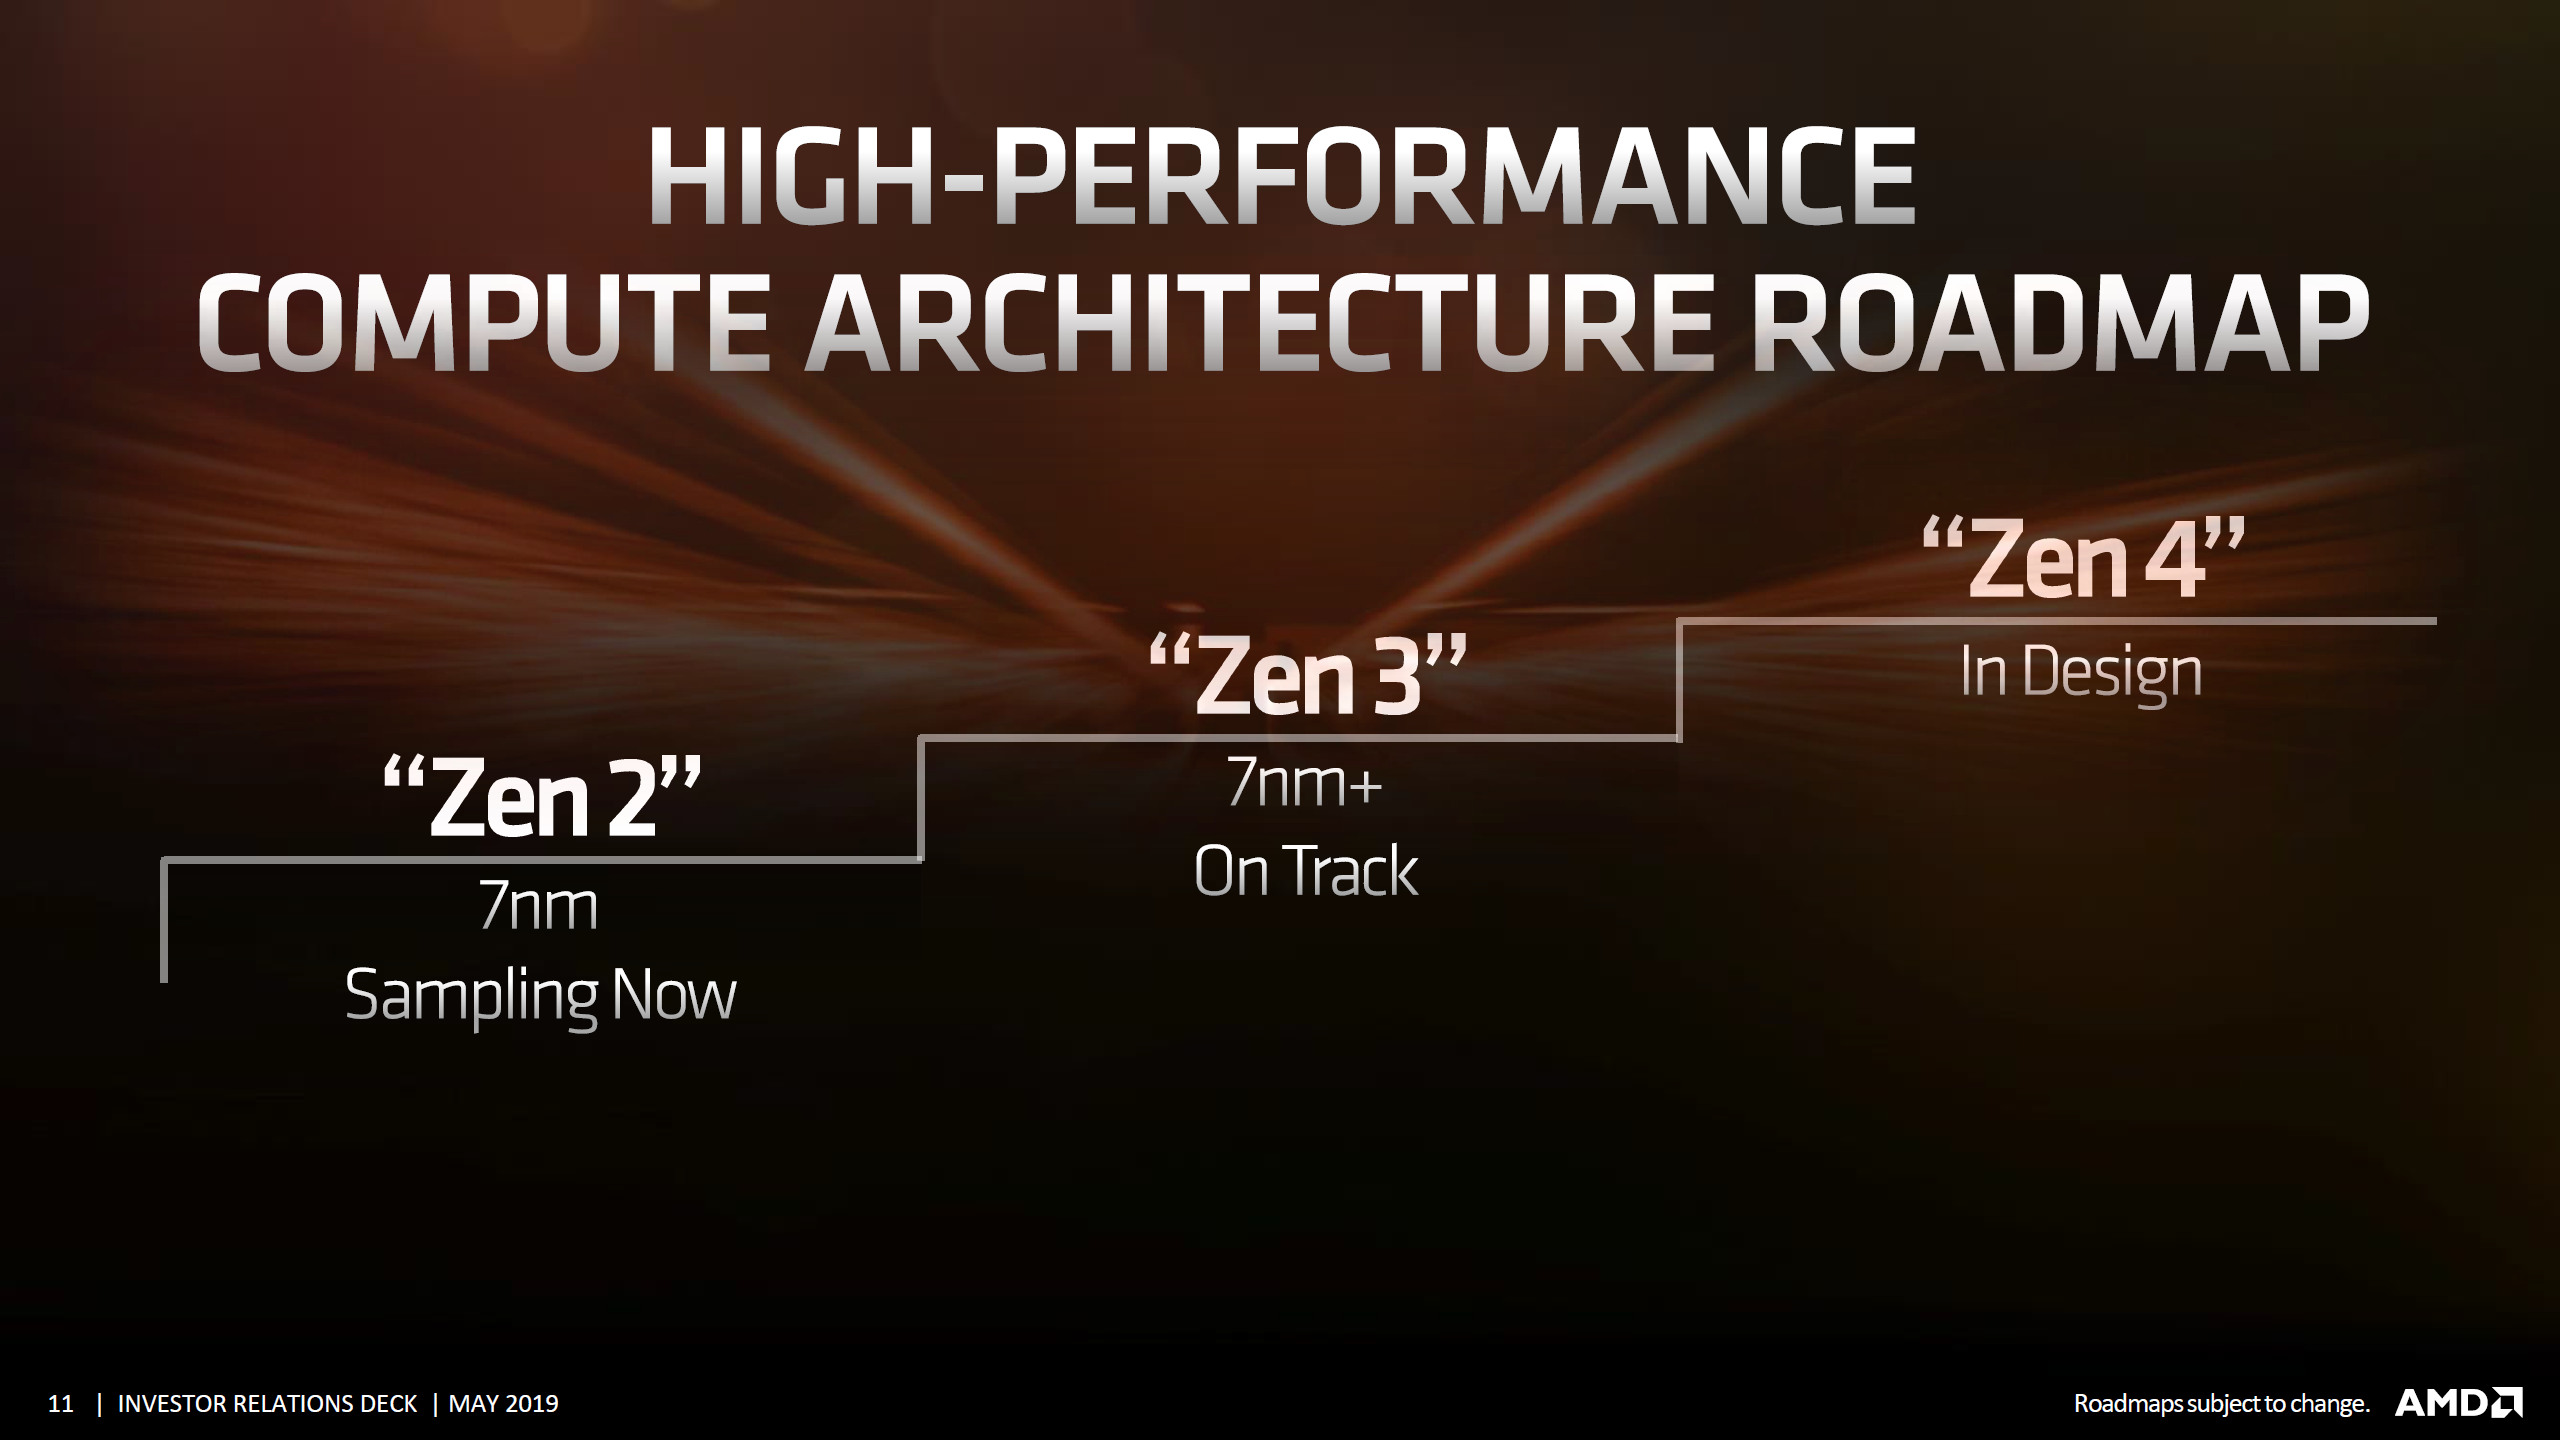 amd cpu gpu roadmap investor presentation 2 ลือ!! AMD กำลังซุ่มพัฒนาเทคโนโลยี 5nm ร่วมกันกับ TSMC ในรูปแบบของ Custom Version ที่กินไฟน้อยลงและความเร็วสูงขึ้น โดยคาดว่าเป็นซีพียู ZEN4 และการ์ดจอ RDNA3 คาดเปิดตัวในปี 2021 